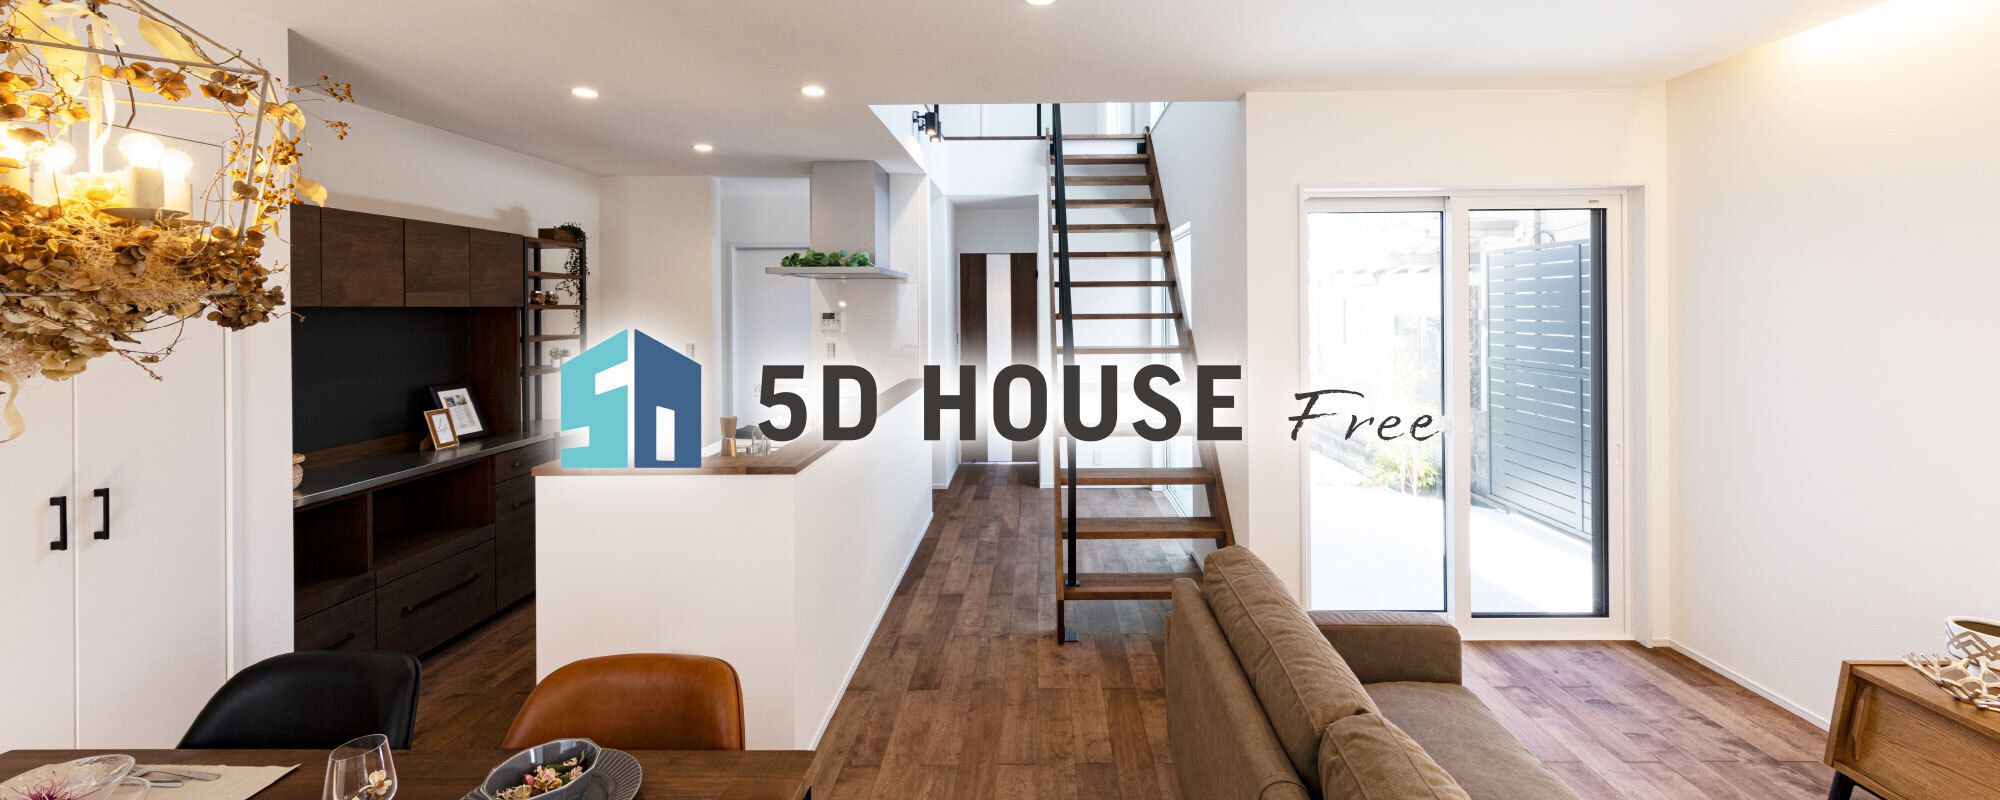 5D HOUSE Free こだわりの暮らしを求めるあなたへ。